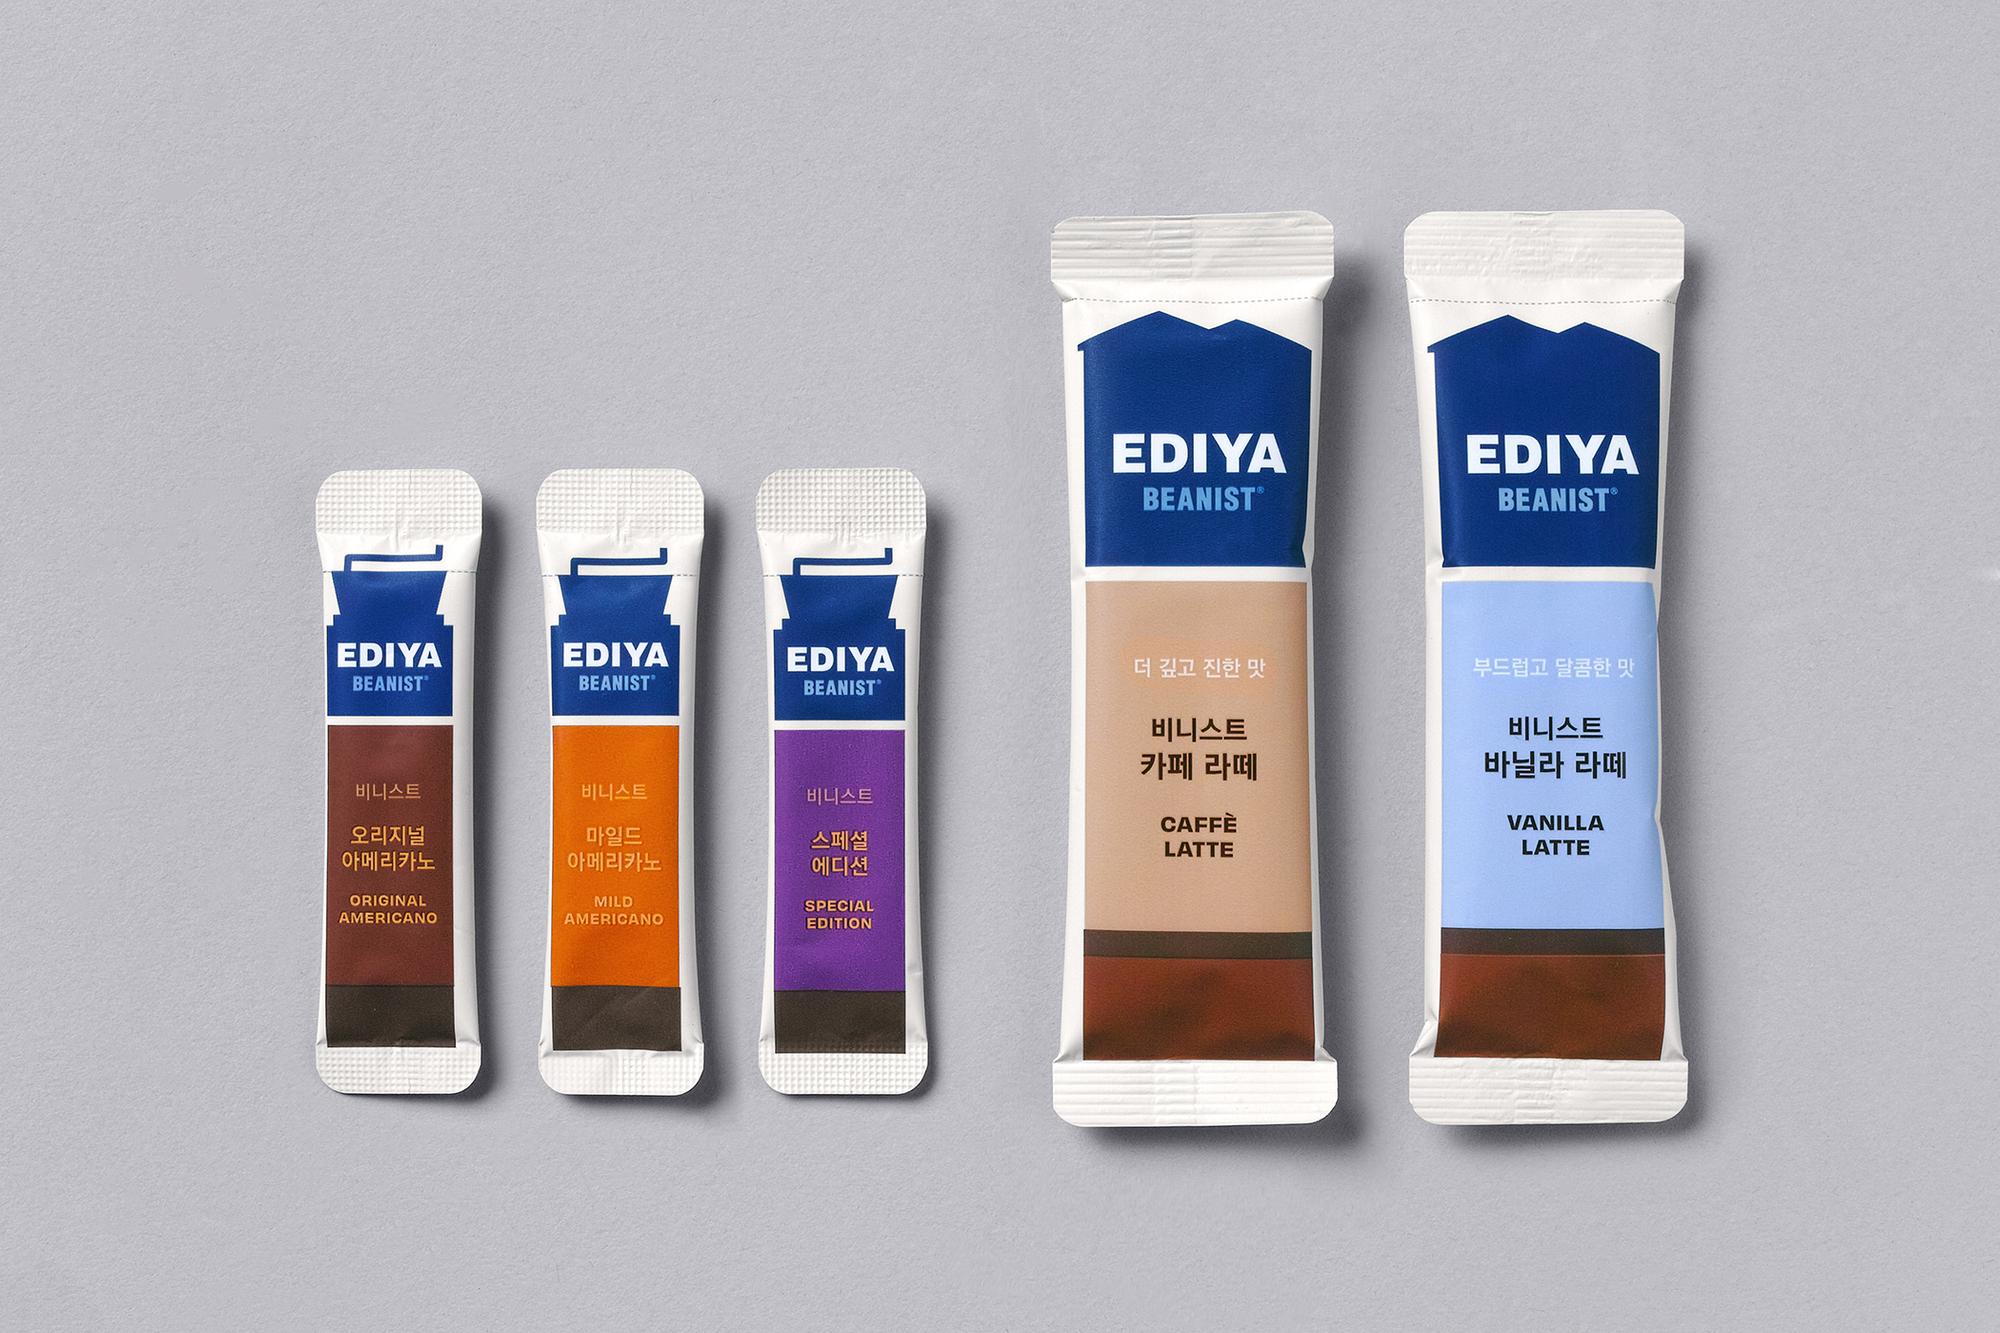 Coffee branding and packaging – Ediya Beanist by Studio fnt, South Korea